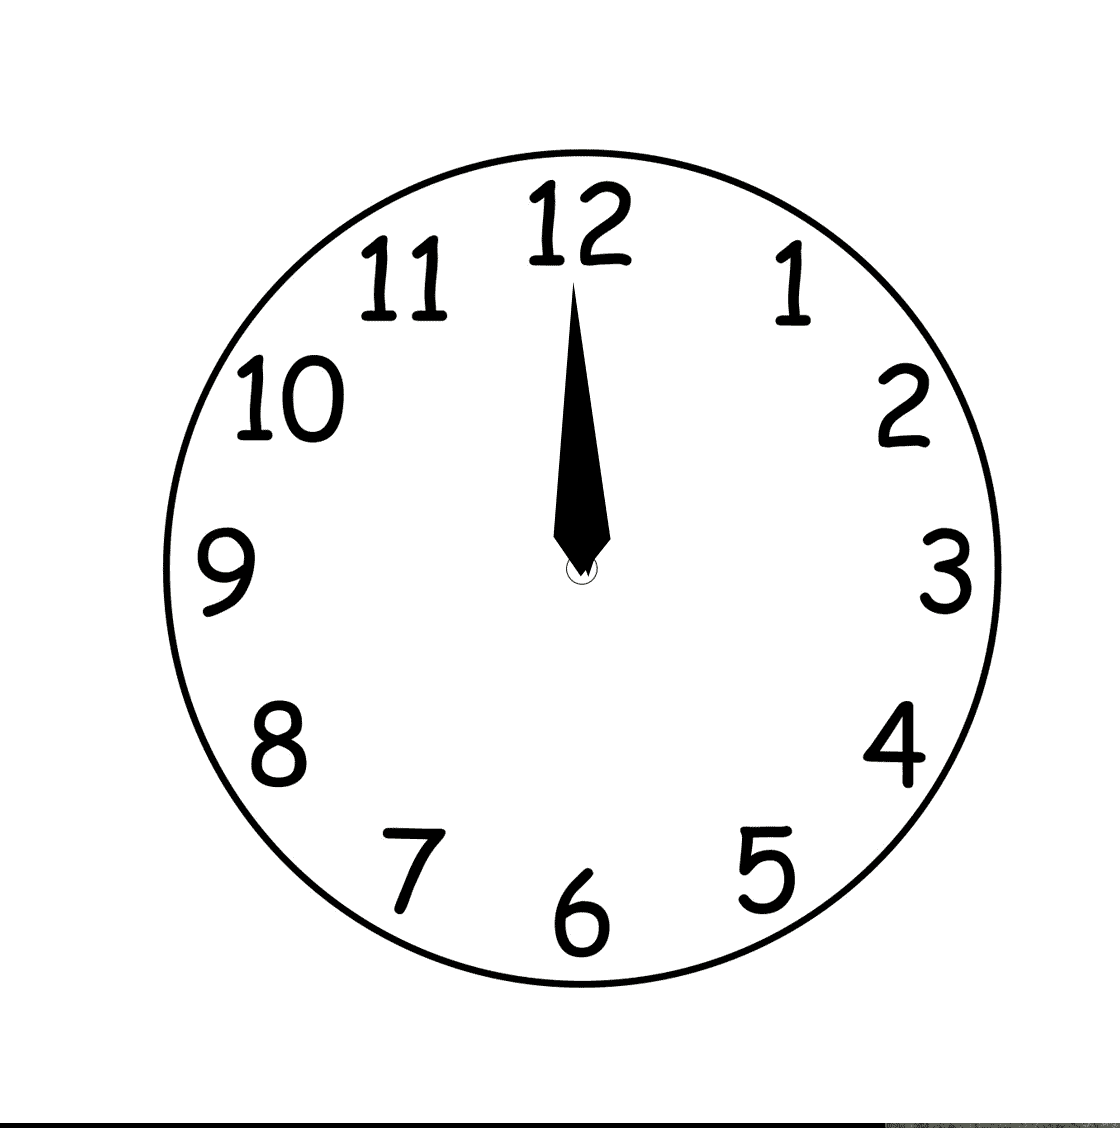 Animated Clock